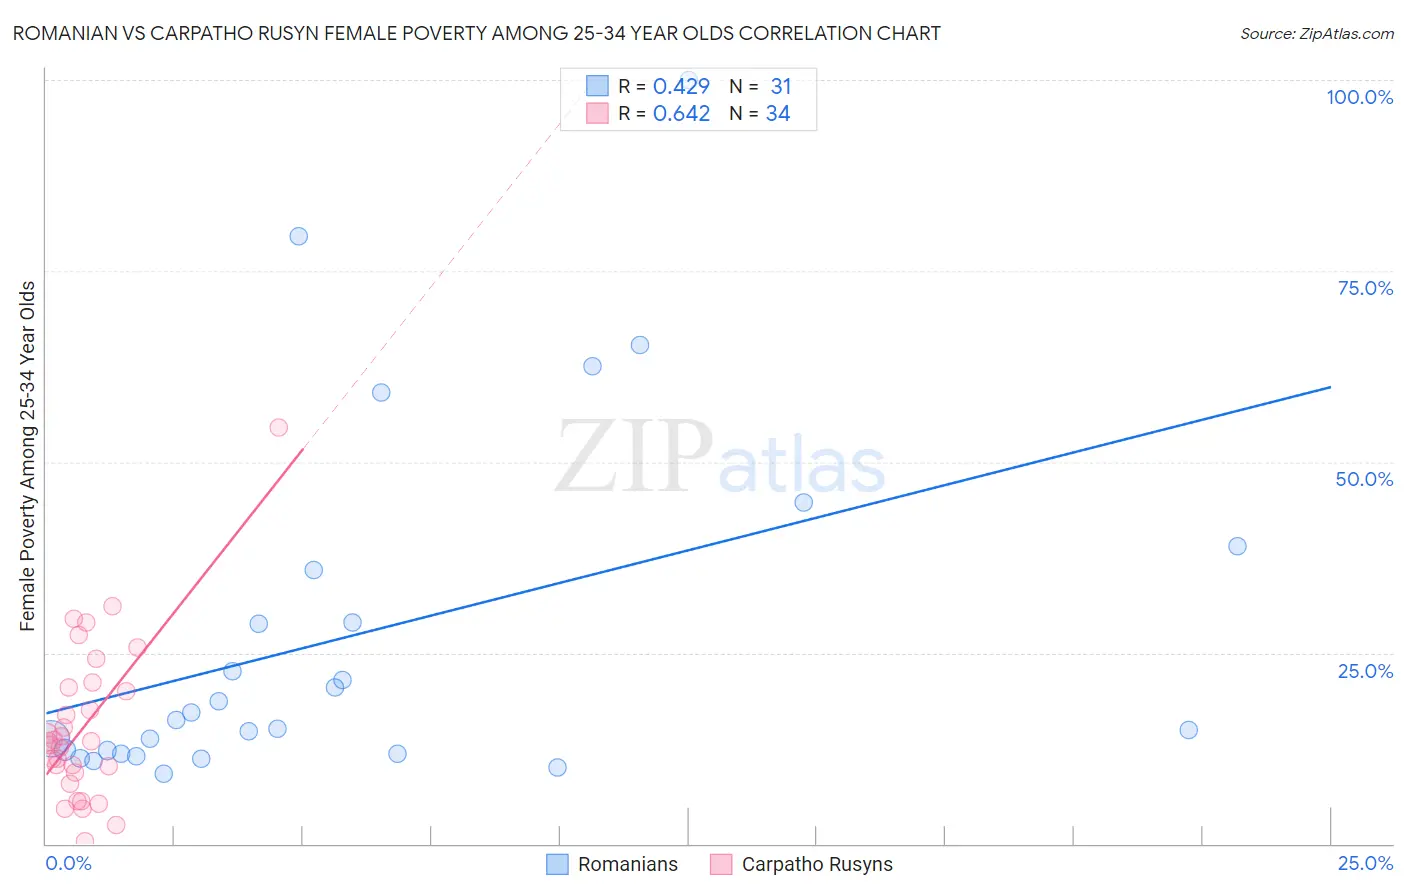 Romanian vs Carpatho Rusyn Female Poverty Among 25-34 Year Olds